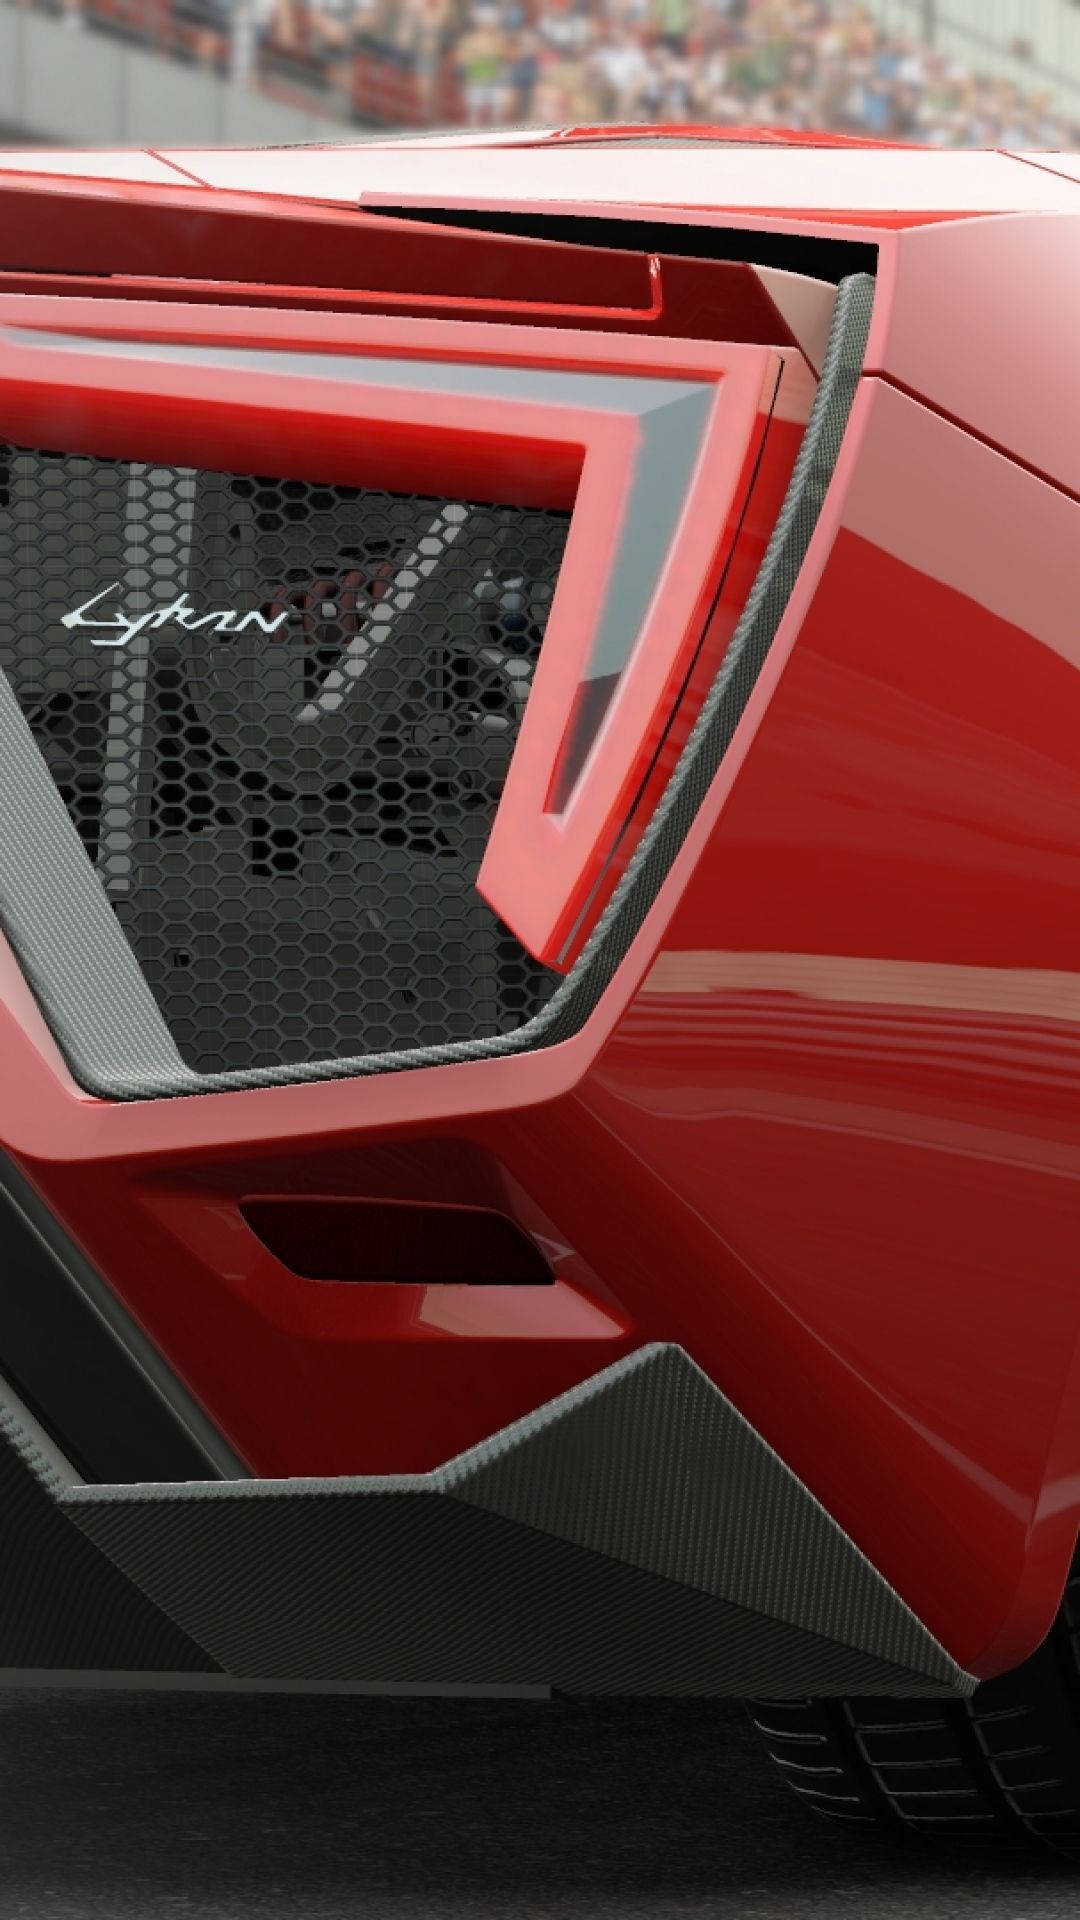 4K Resolution Drive - Project Cars Lykan Hypersport Wallpaper